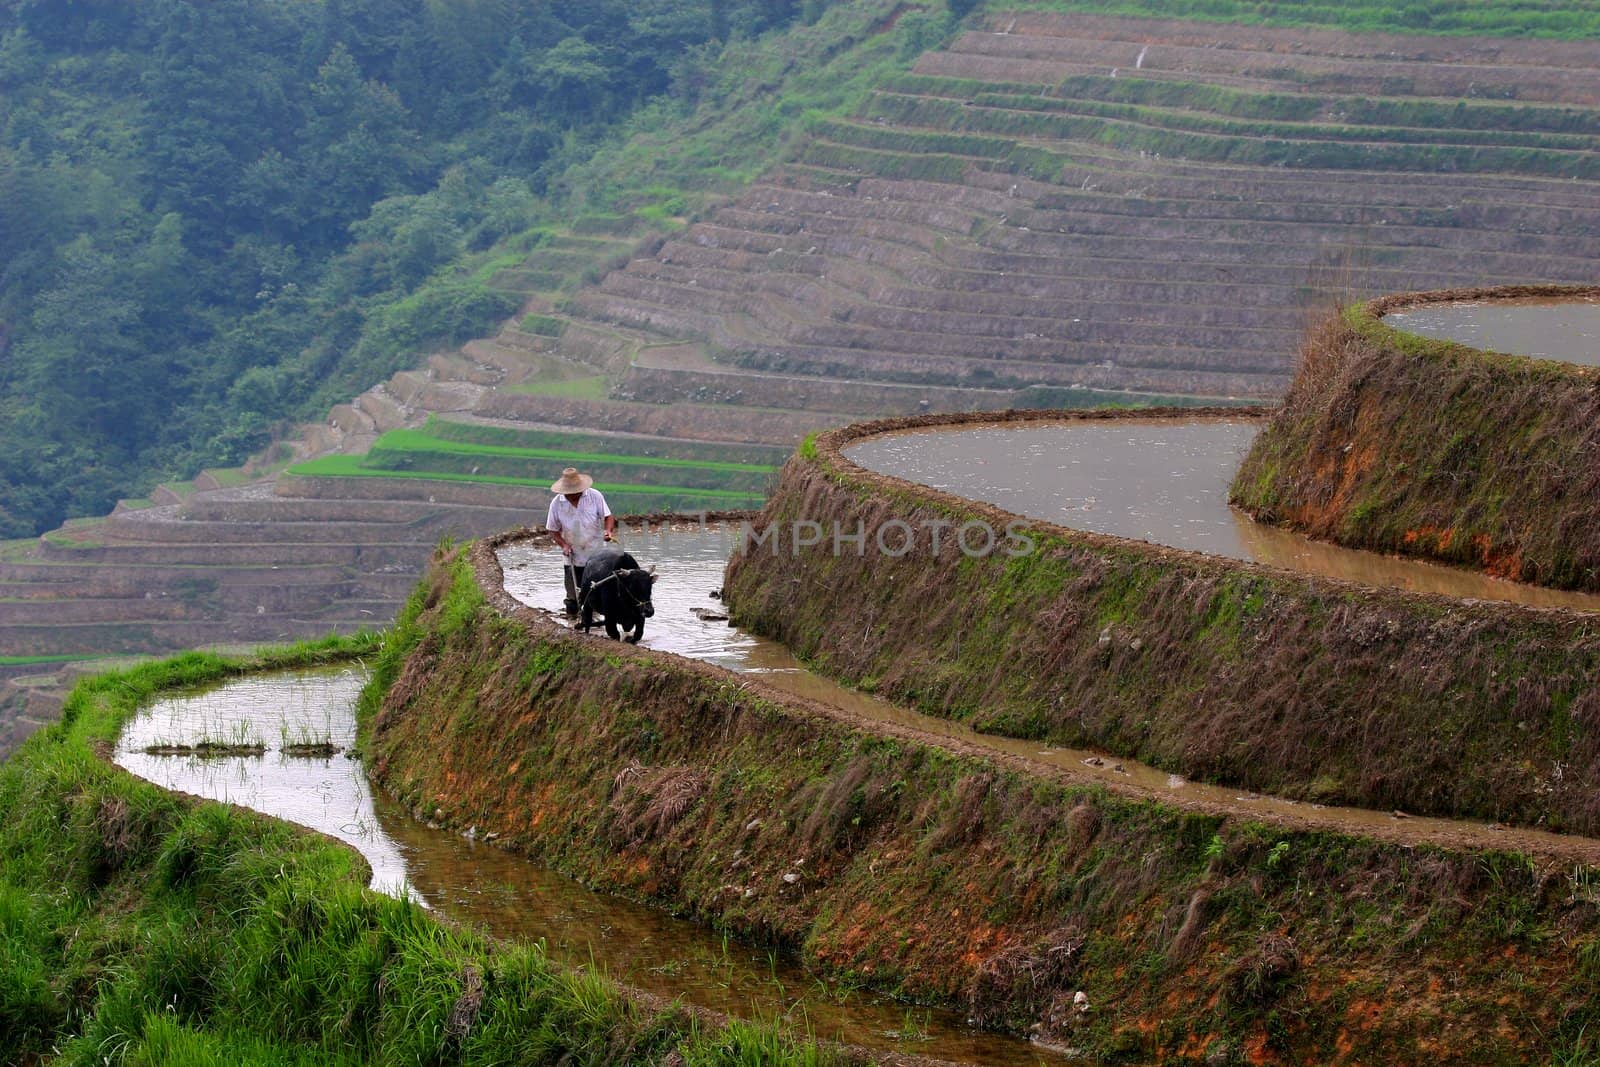 Man and water buffalo working on rice terrace